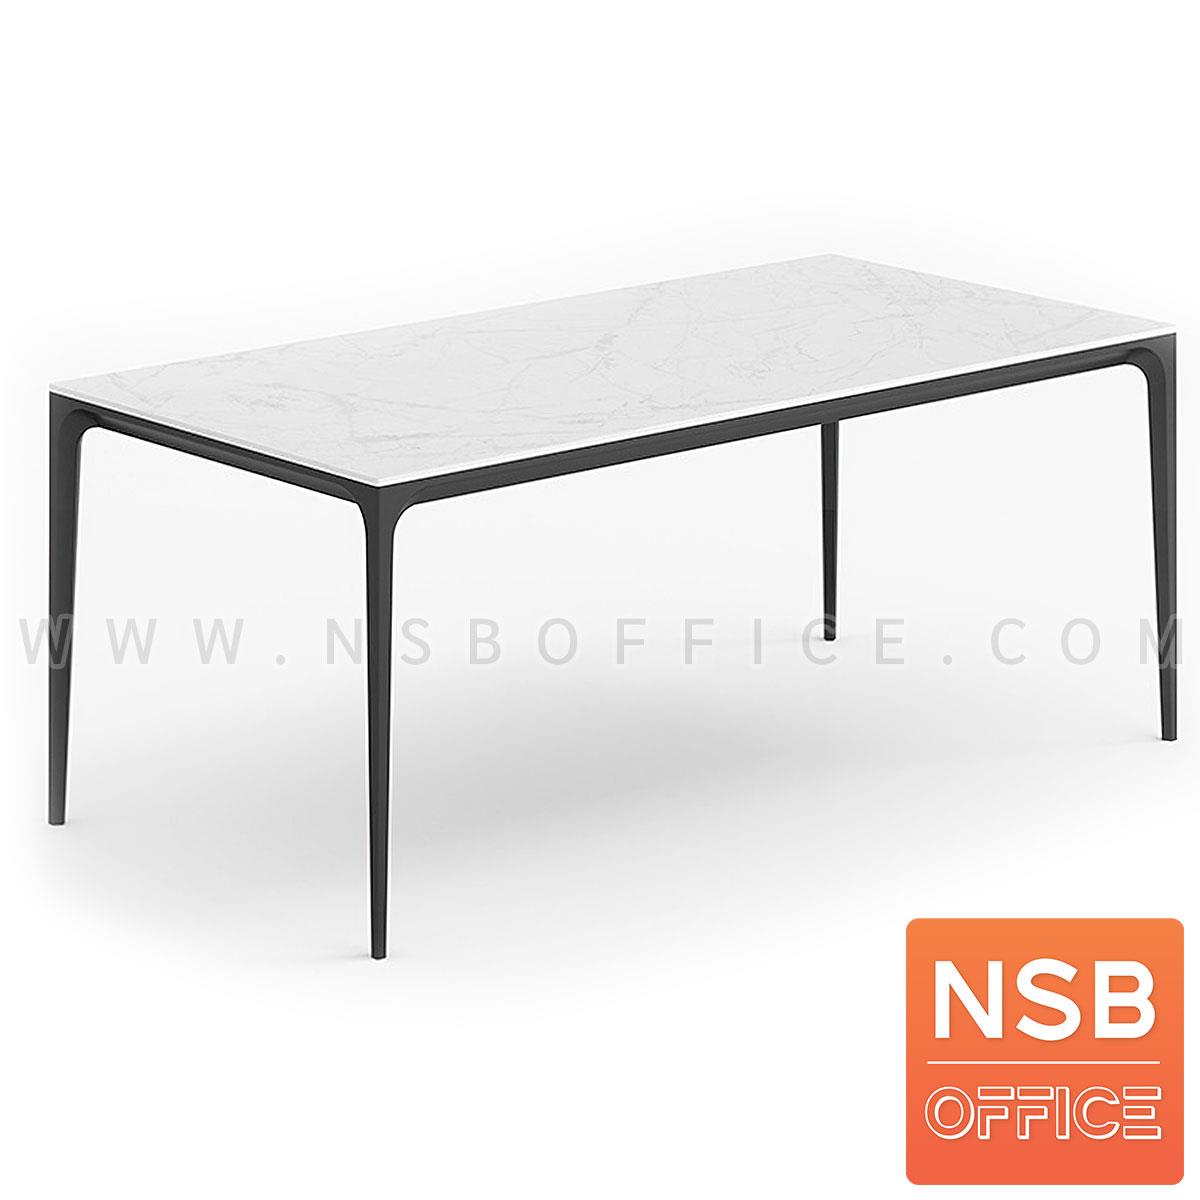 A05A233:โต๊ะทรงสี่เหลี่ยม รุ่น Flexcil (เฟล็กซิล) ขนาด 240W*120D cm. ขาเหล็กสีเทาเข้ม